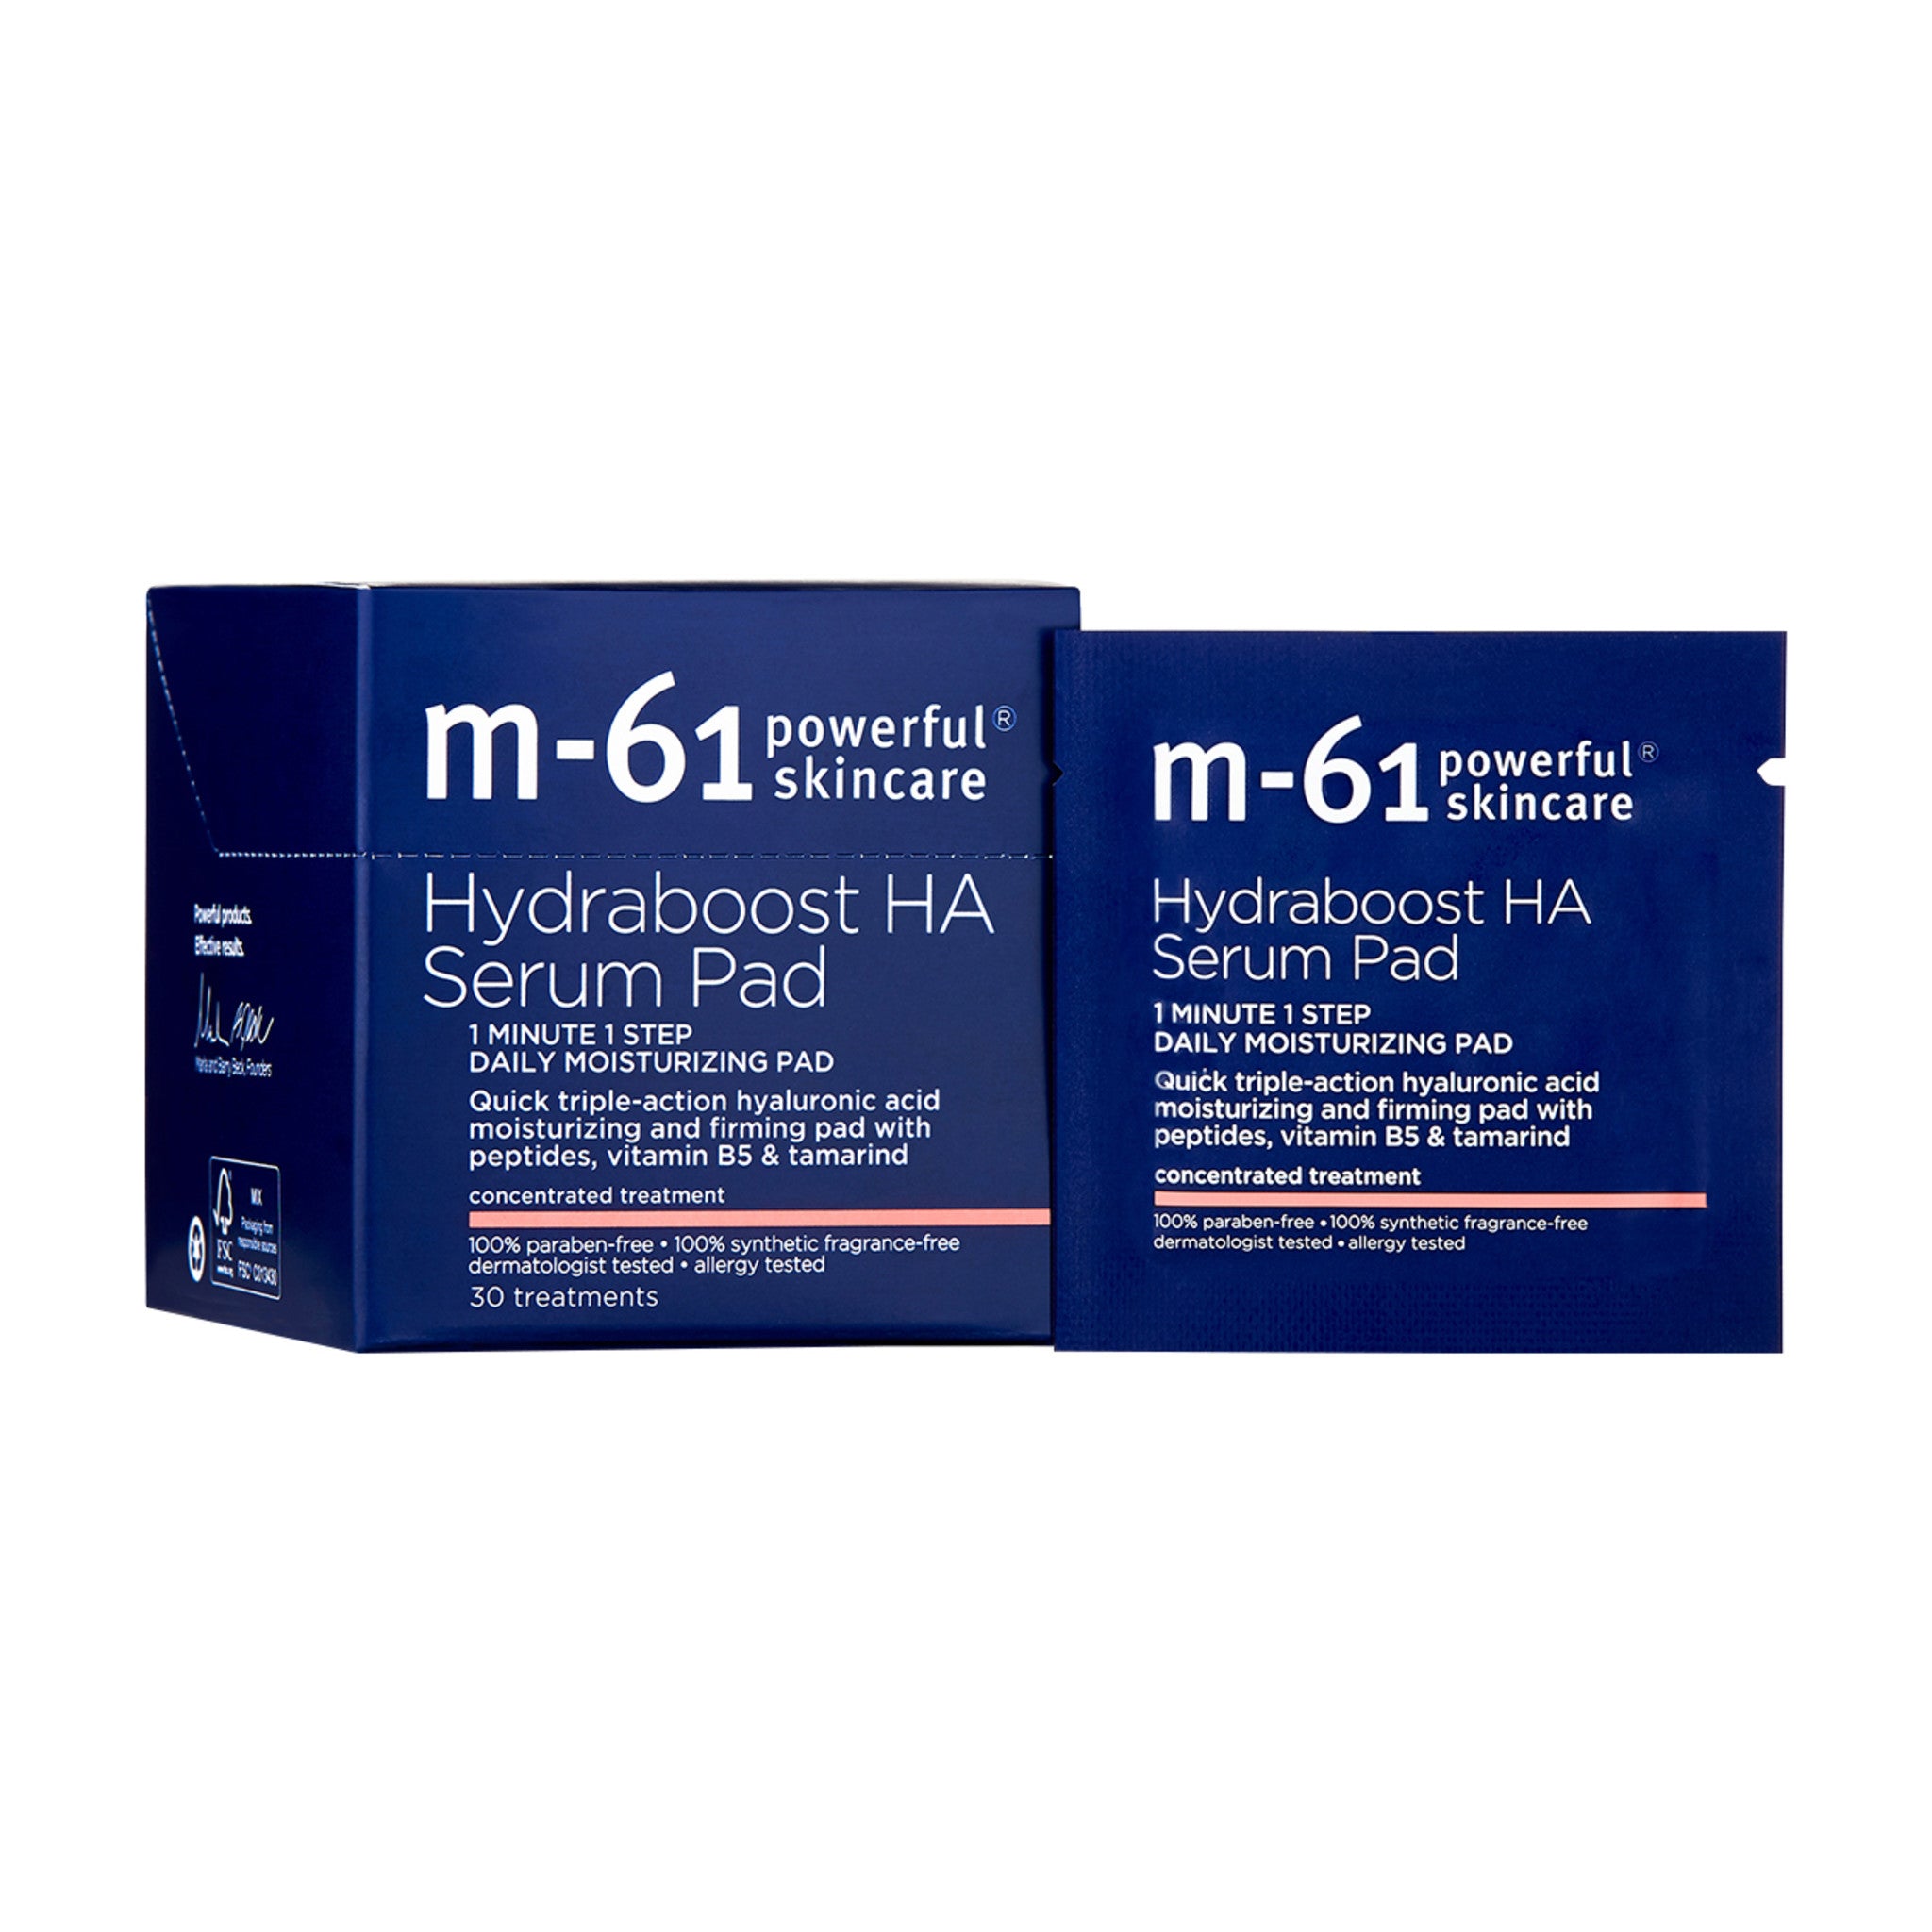 M-61 Hydraboost HA Serum Pad Size variant: 30 treatments main image.